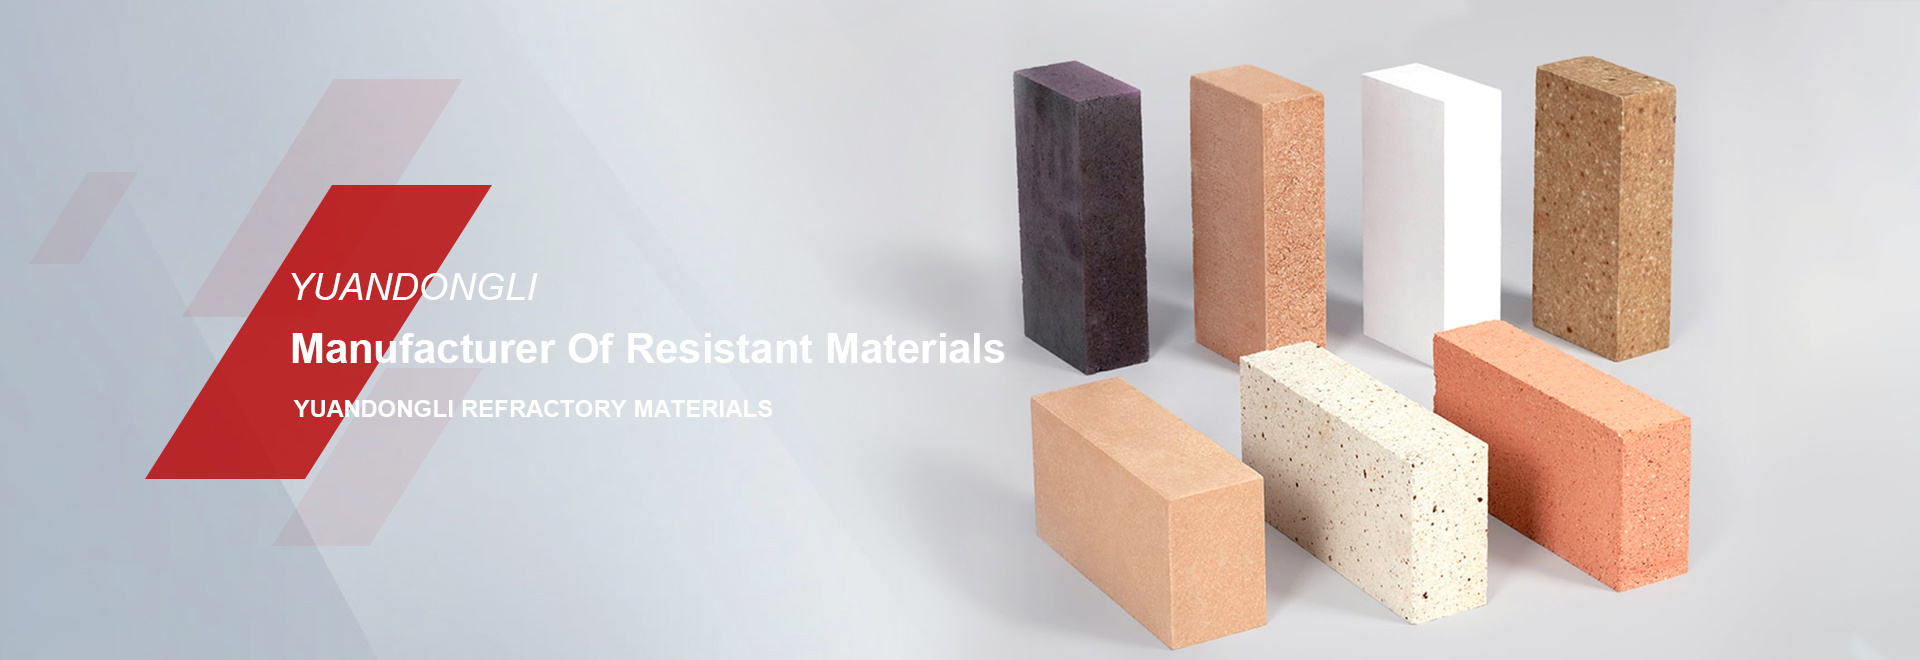 Manufacturer Of Resistant Materials